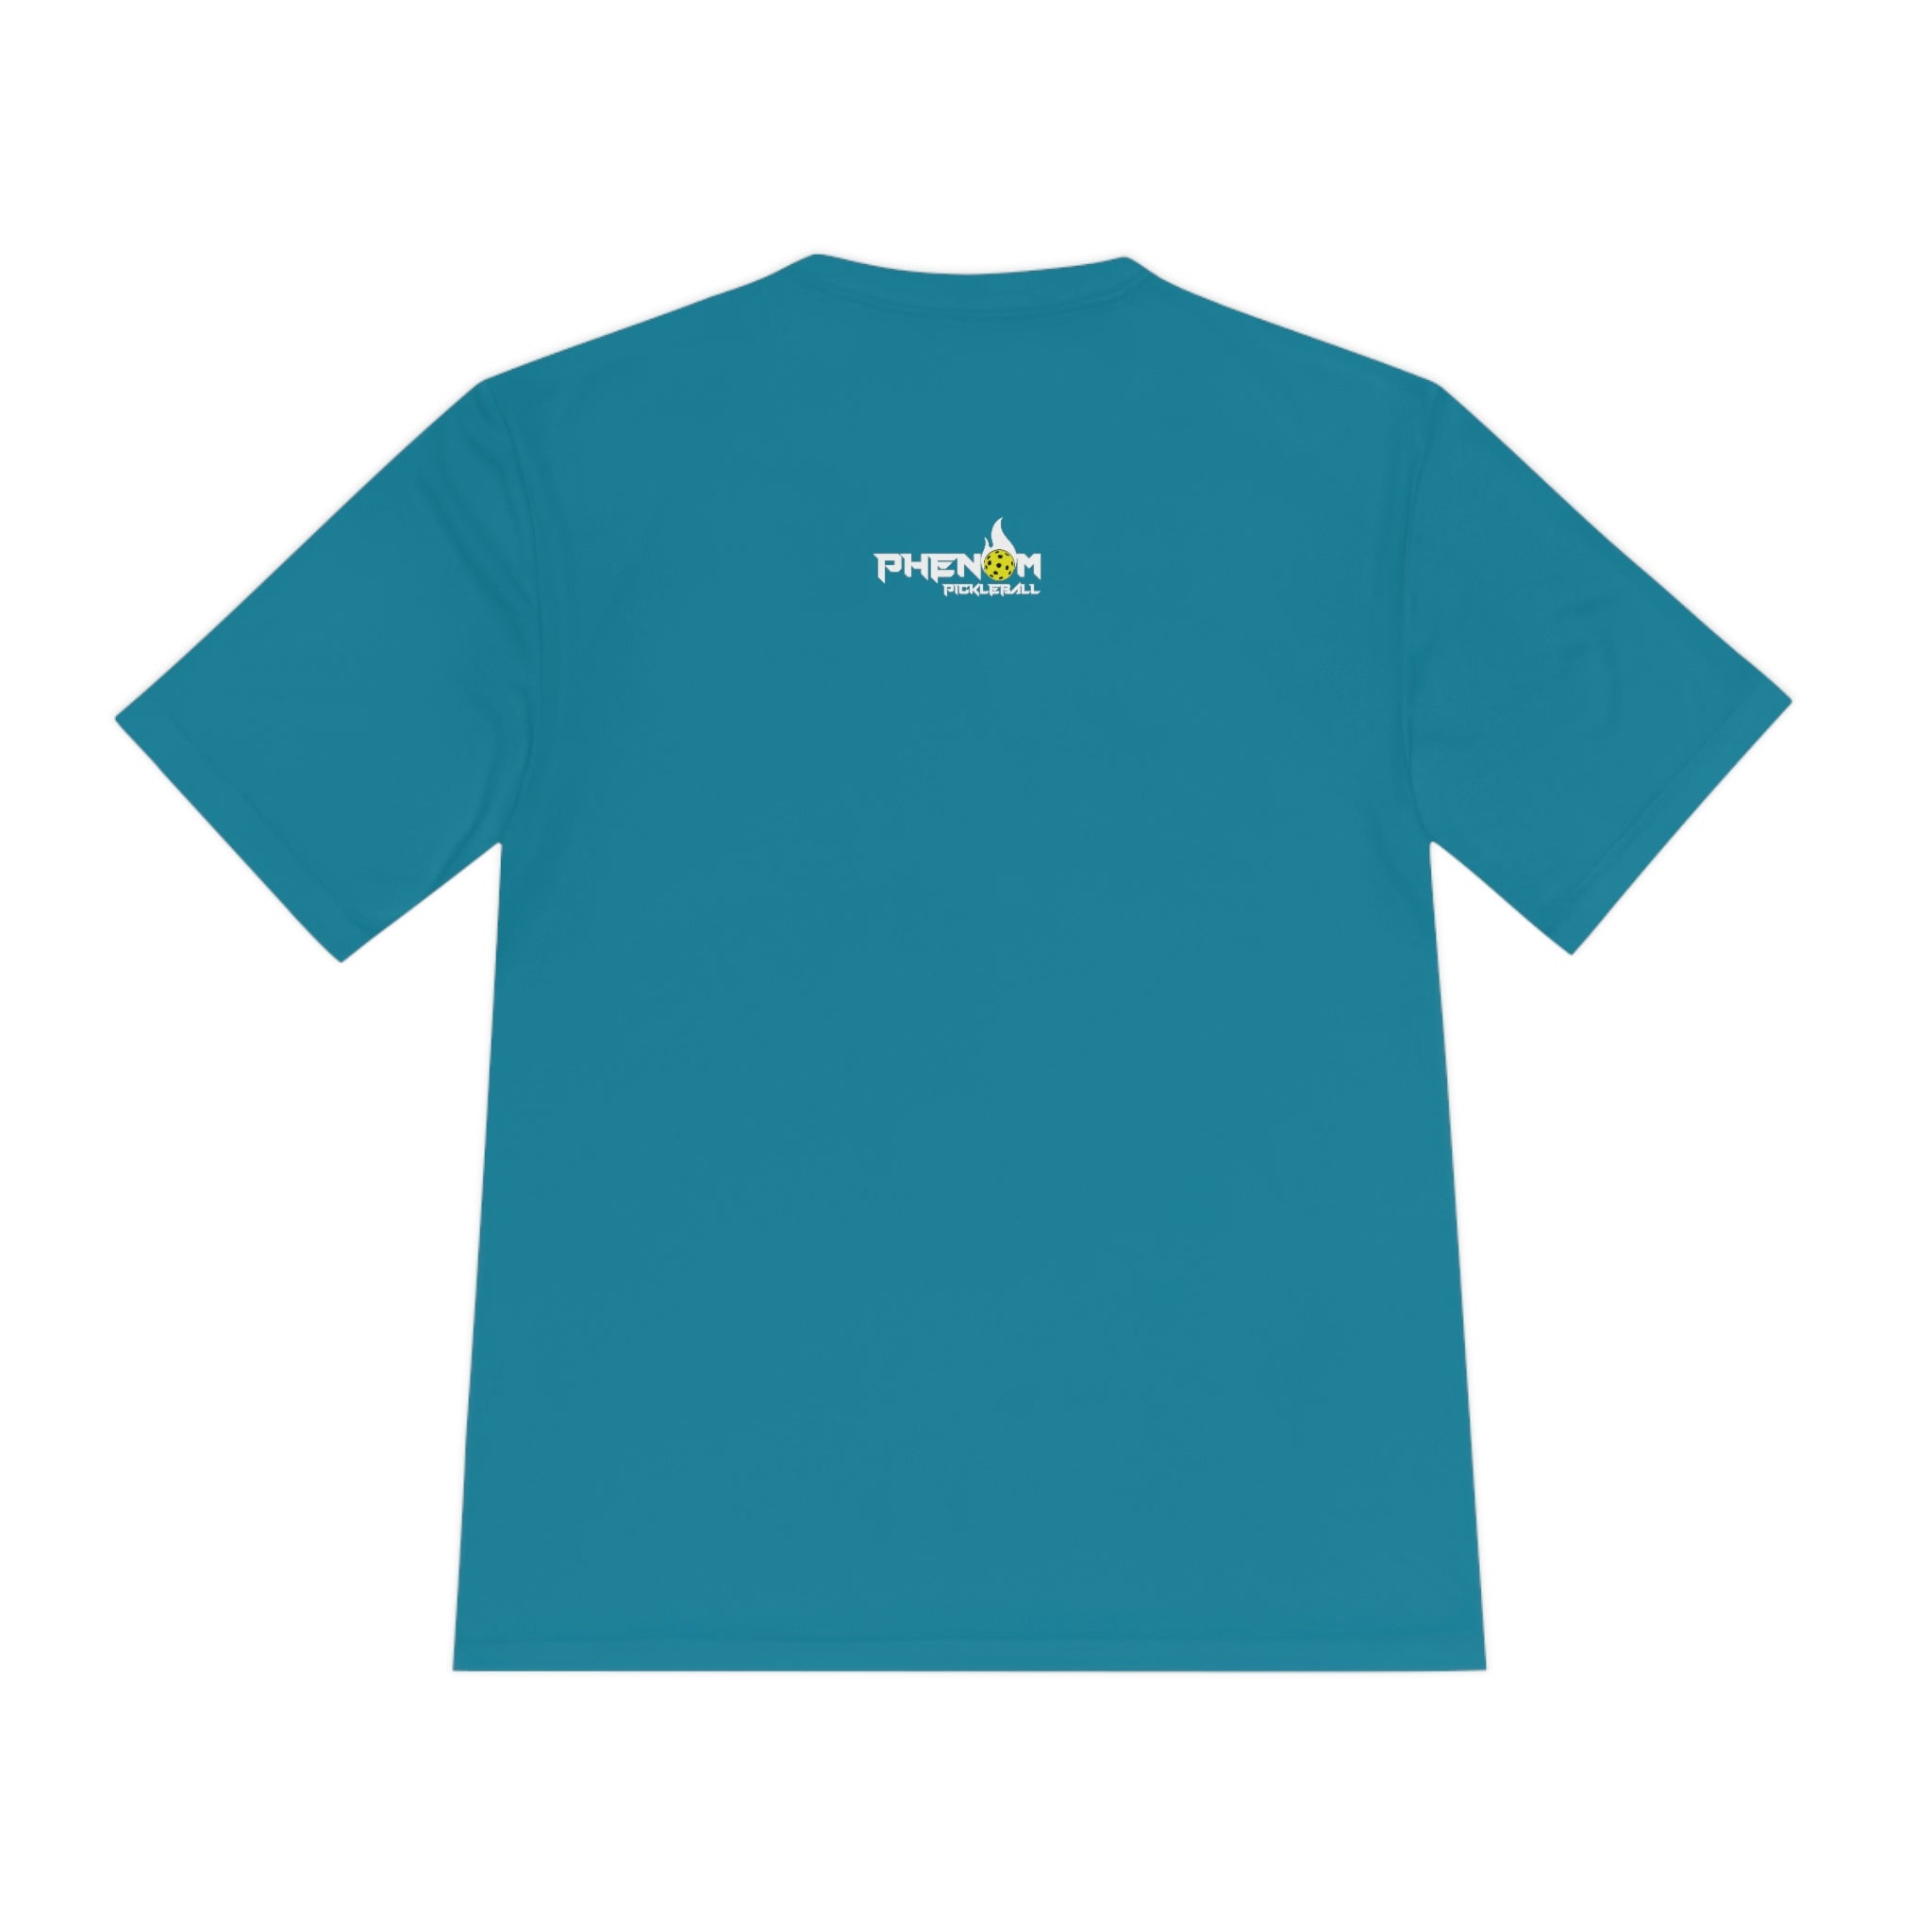 aqua blue heavy dinker men's athletic pickleball apparel shirt phenom logo back view